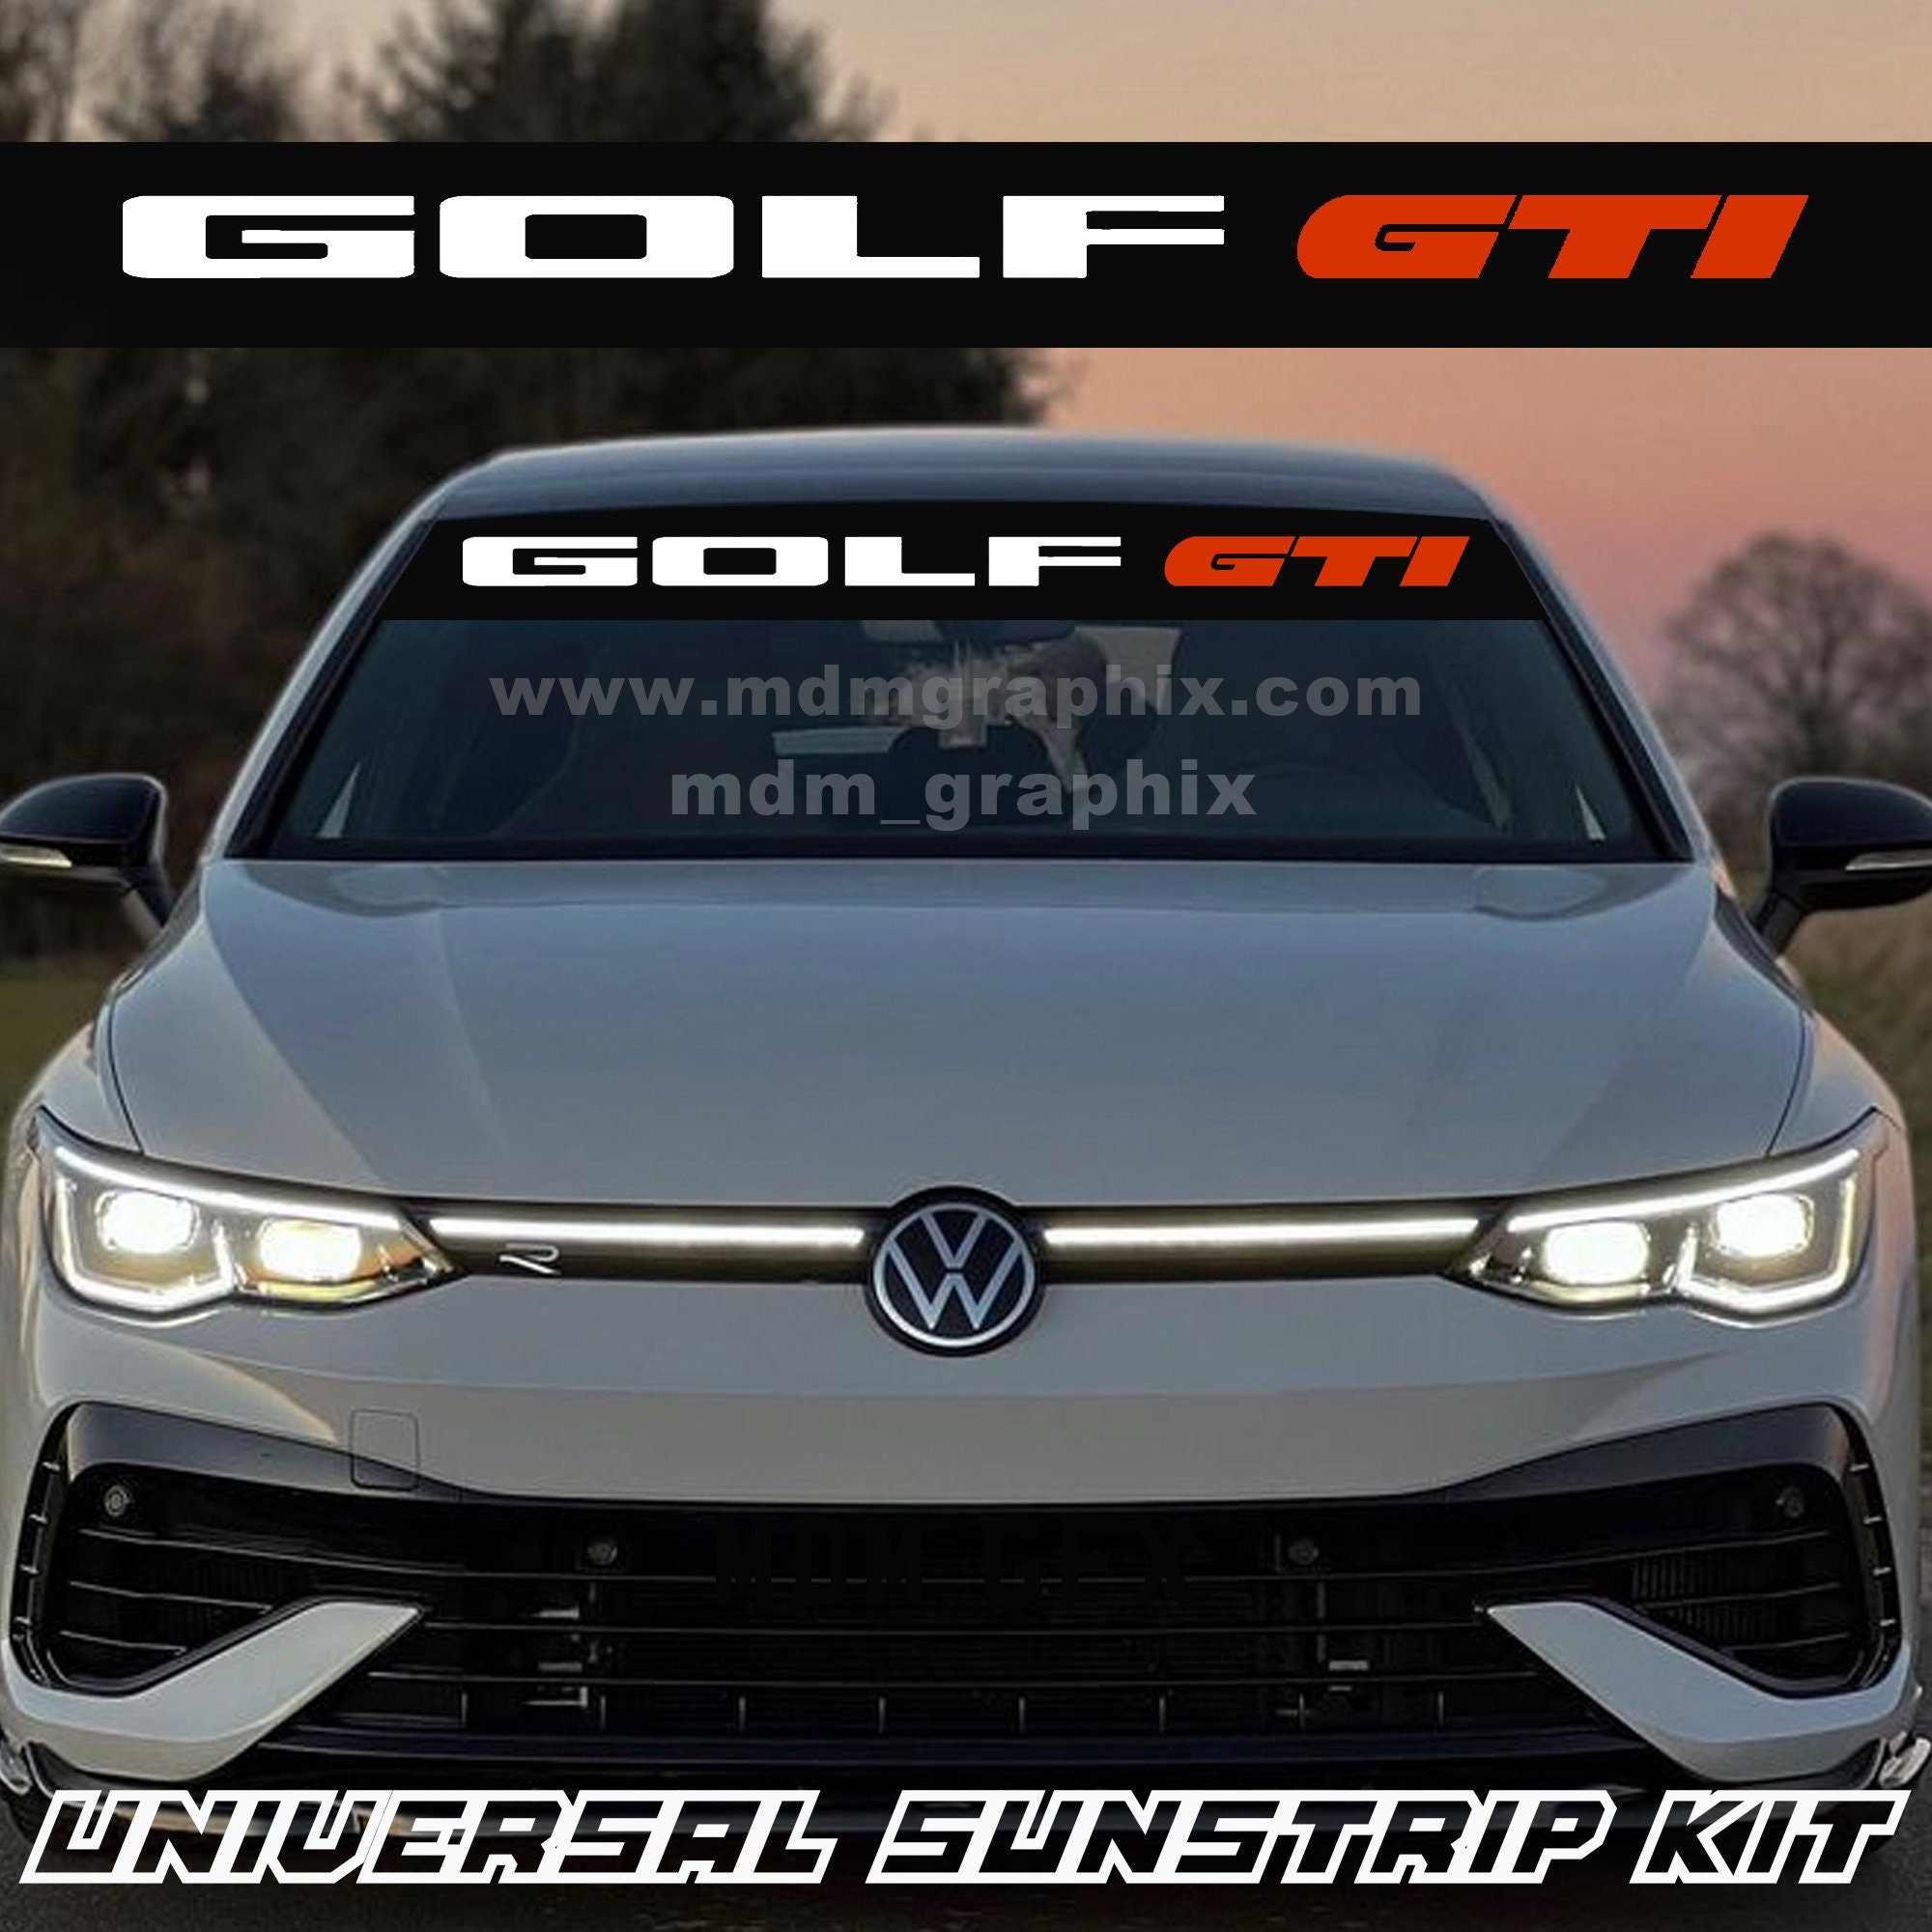 Vw Golf Gti White Sunstrip Decal Mk1 Mk2 Mk3 Mk4 Mk5 Mk6 Mk7 Mk8 German Vag  Dub Vwgolfgti Tuning Visor Stance Low Gtd Volkswagen 